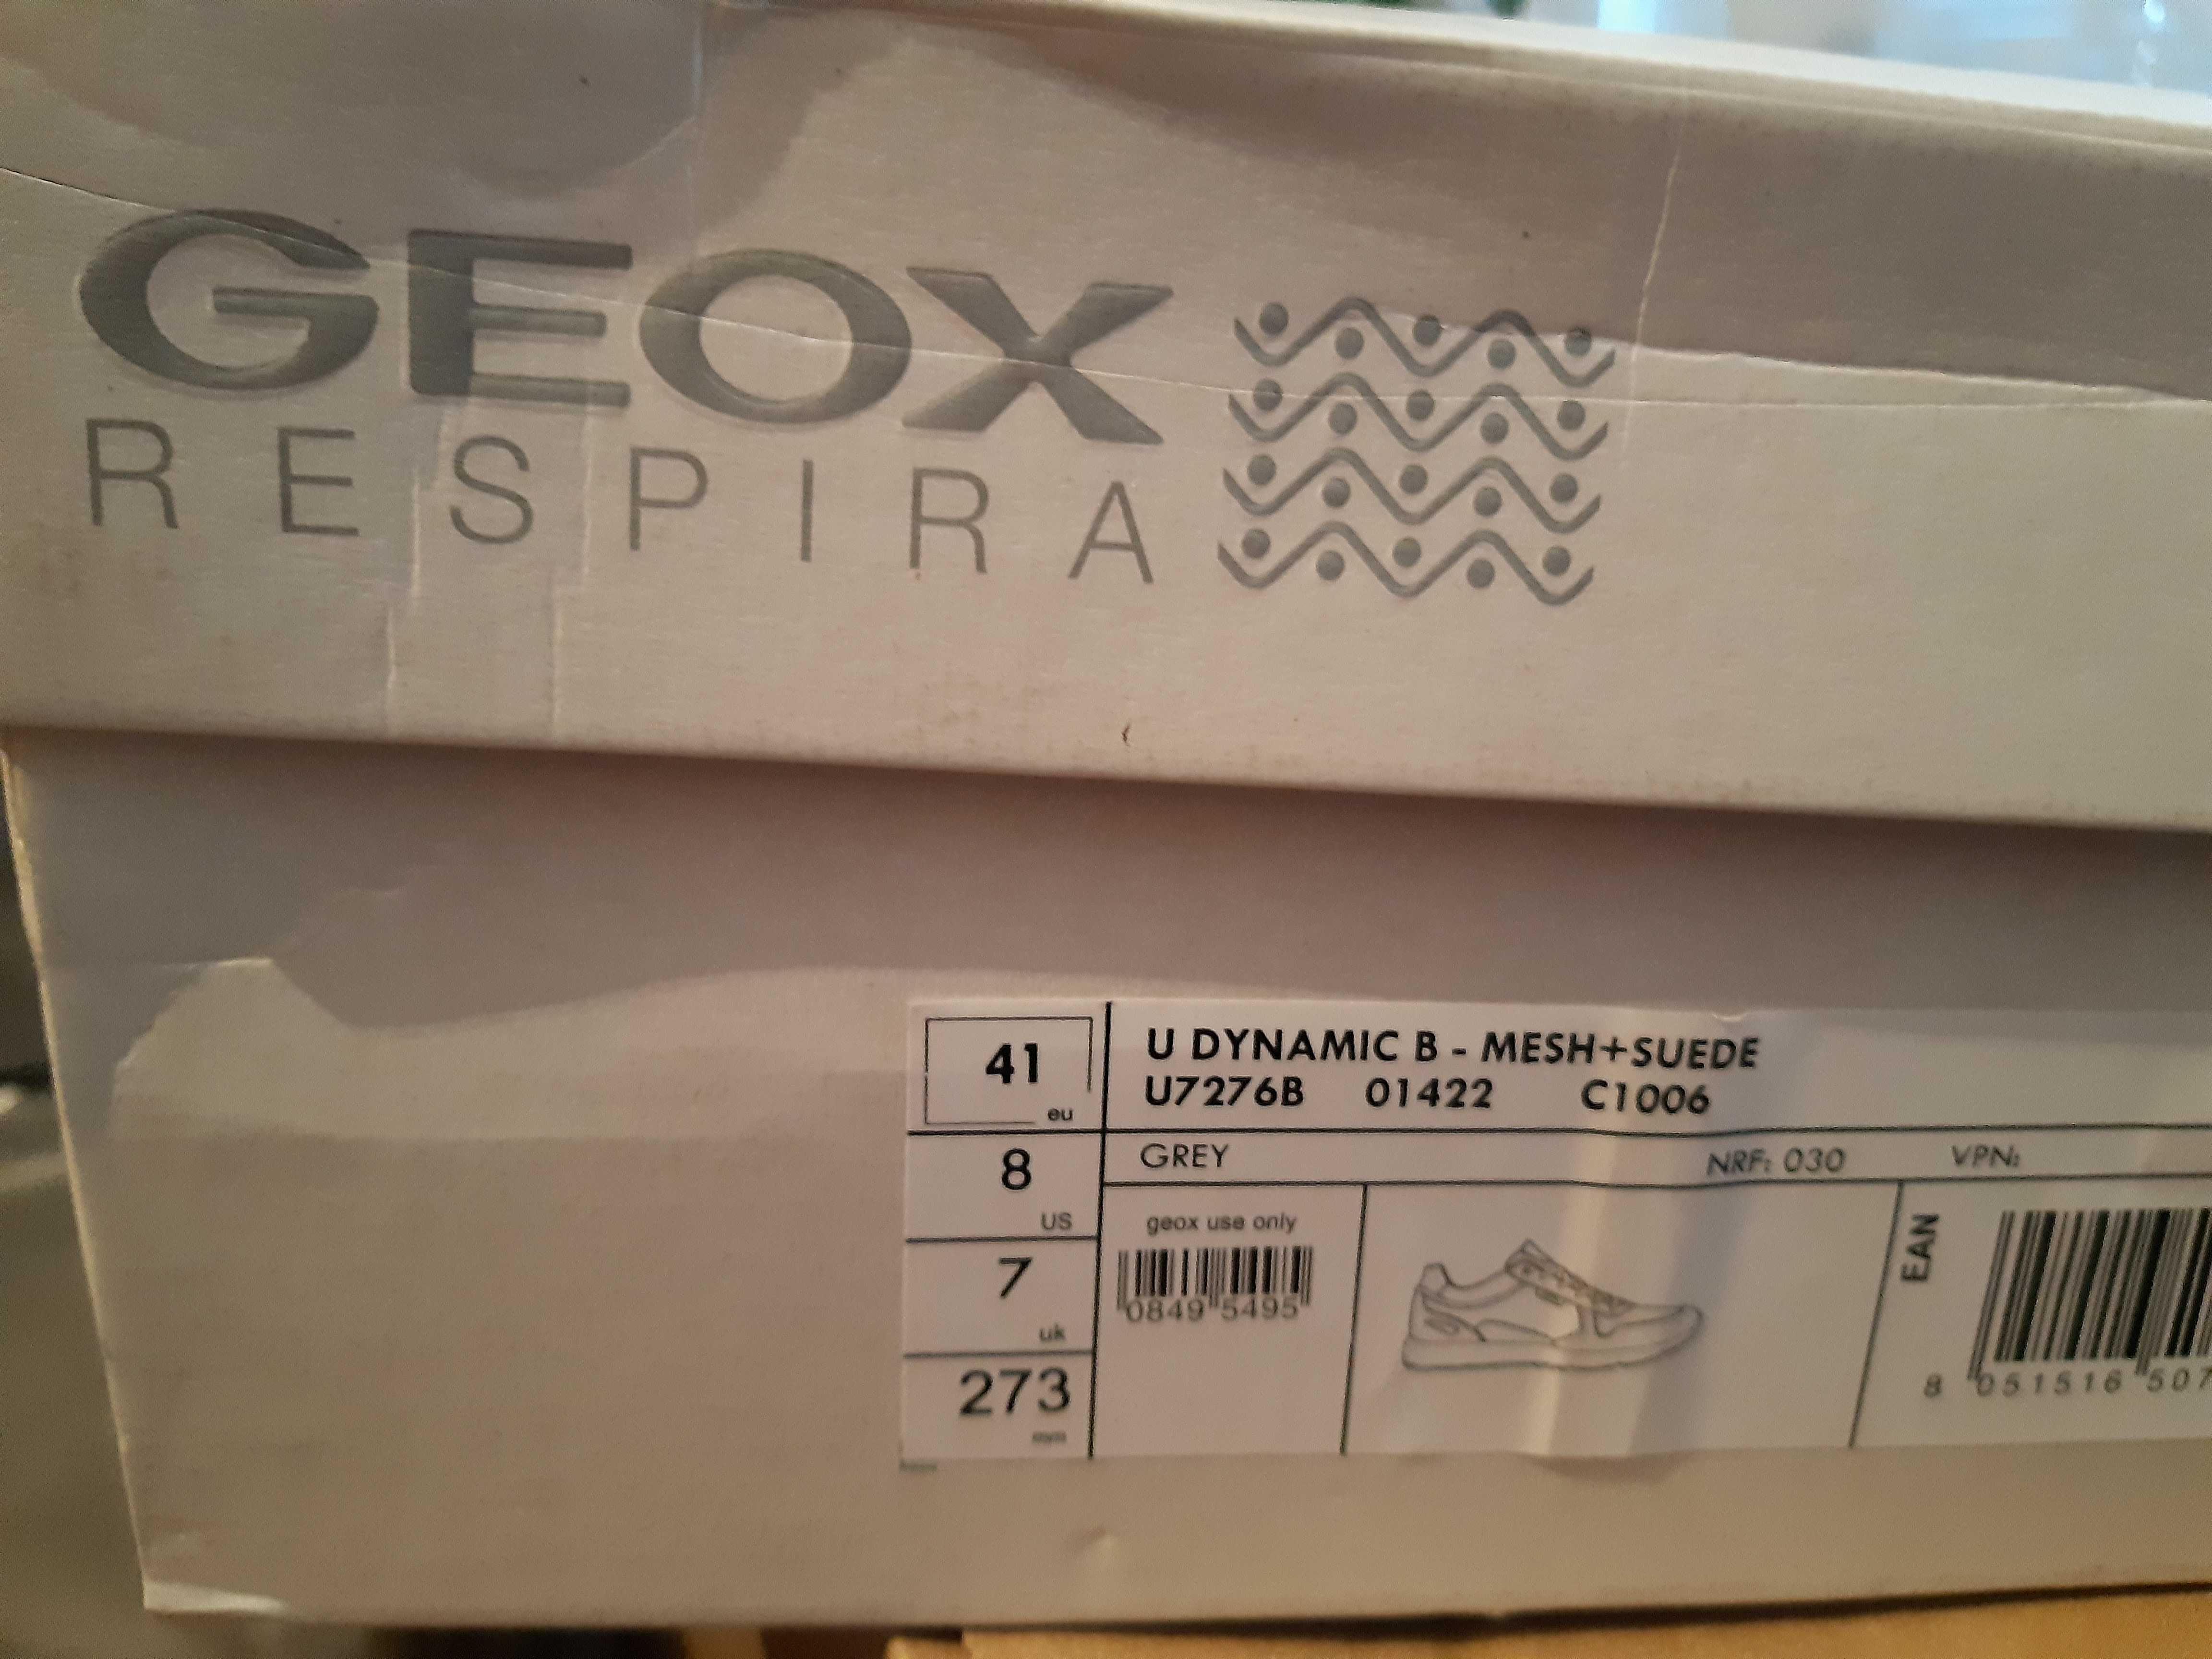 Geox Fitflop CONVERSE/Timberland/  ест.кожа 100% ори